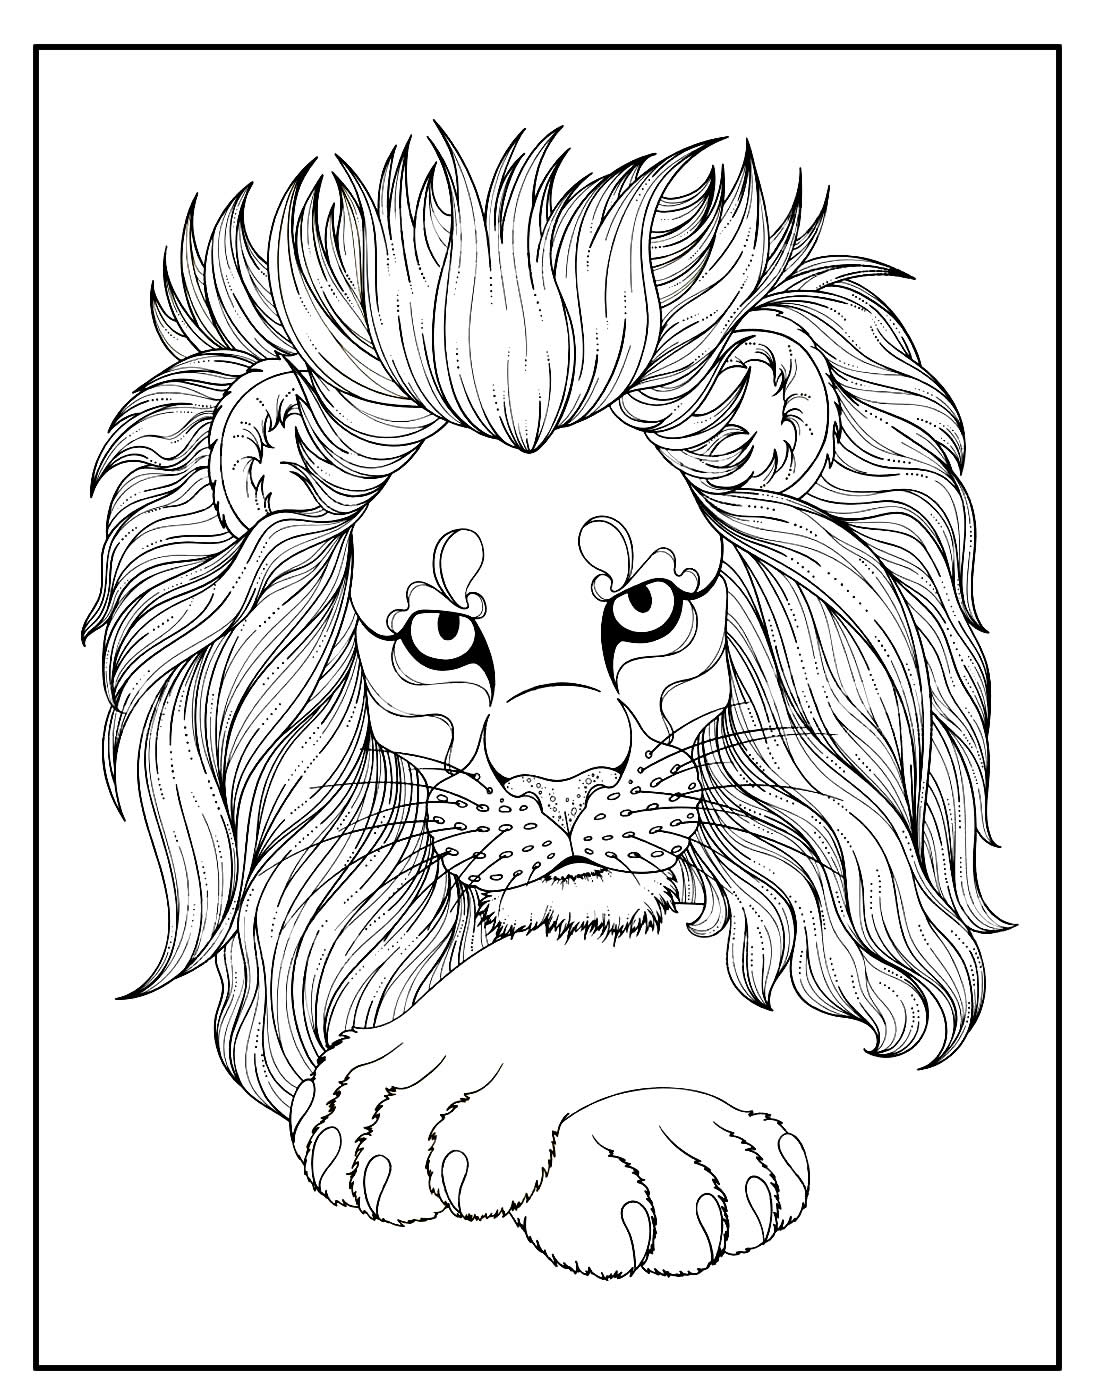 Página para colorir de Leão